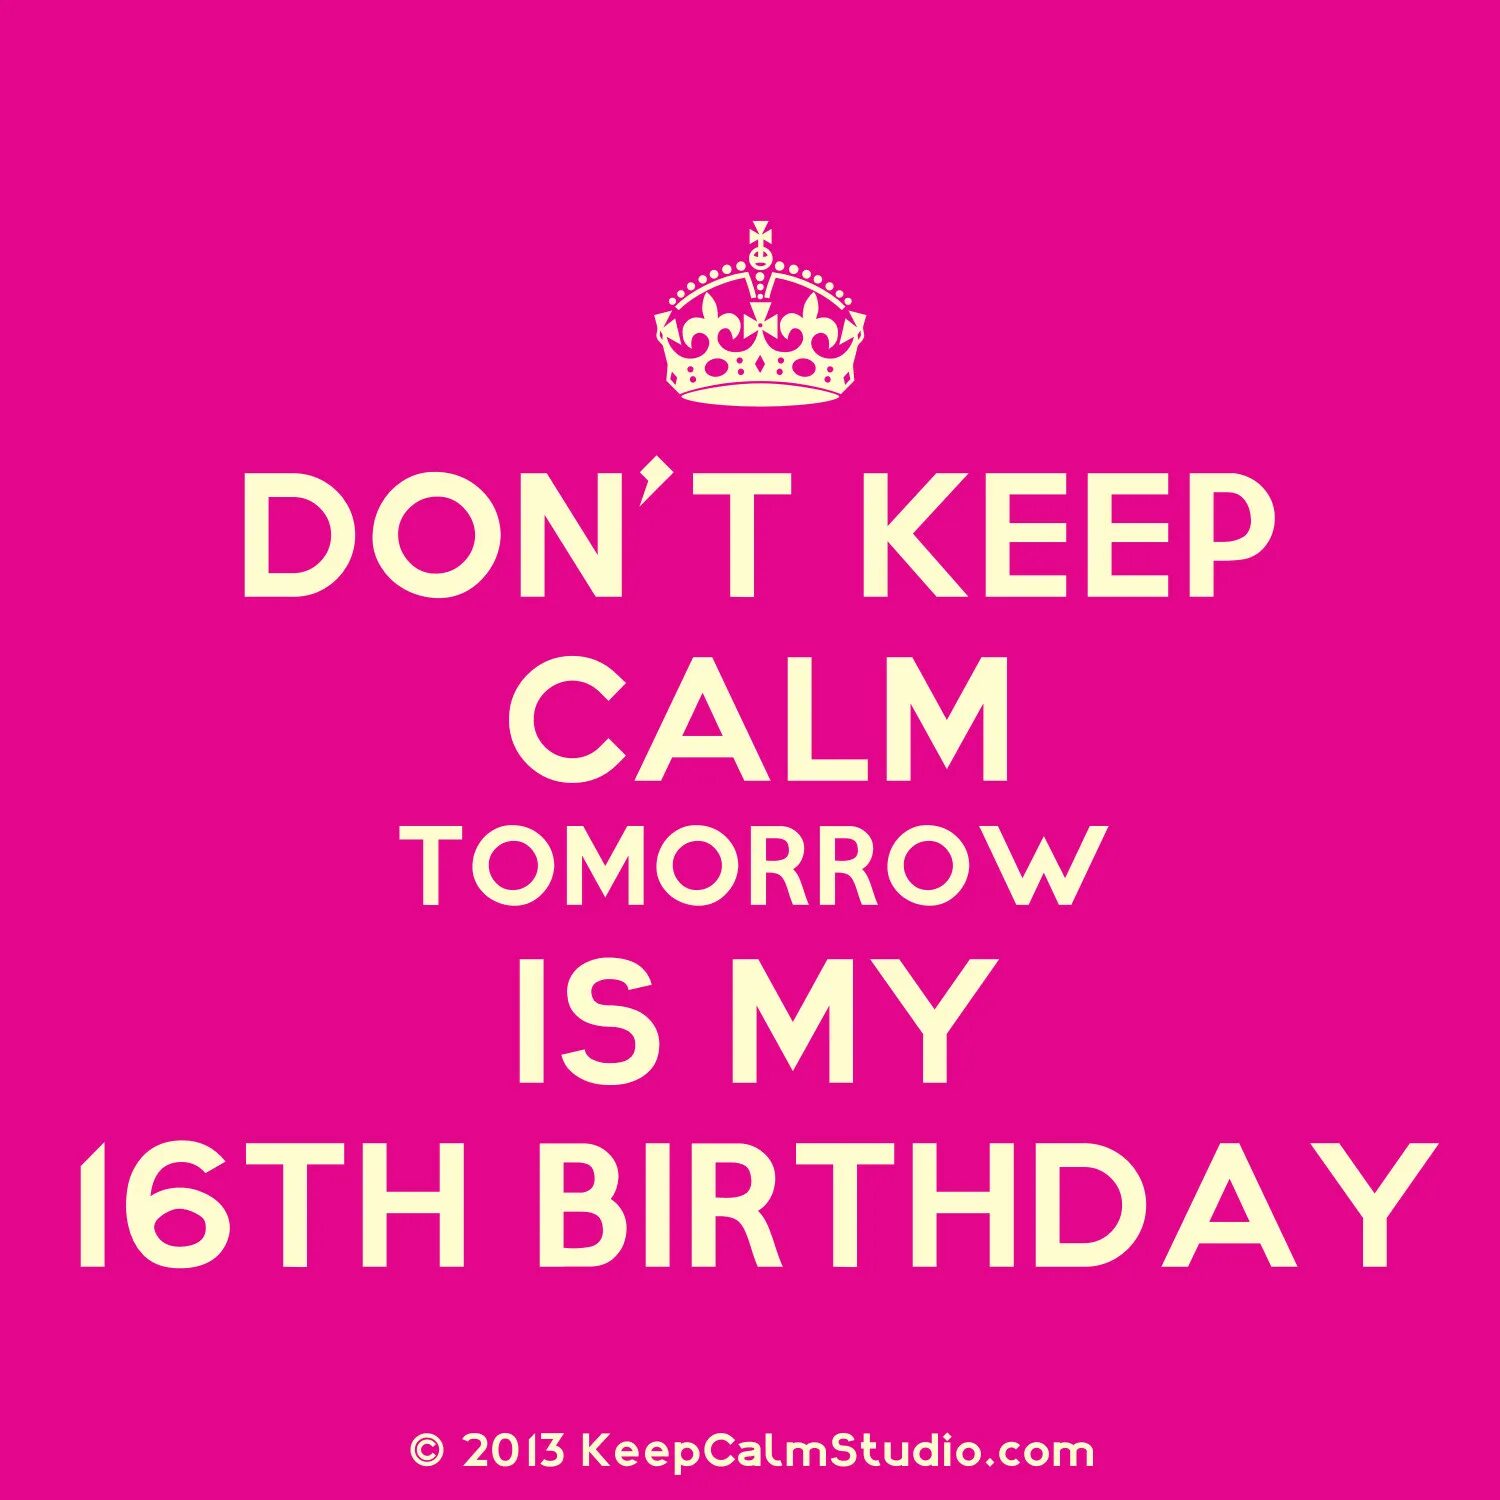 5 класс its my birthday. Tomorrow is my Birthday. Tomorrow my Birthday. Its my Birthday tomorrow. My Birthday is.